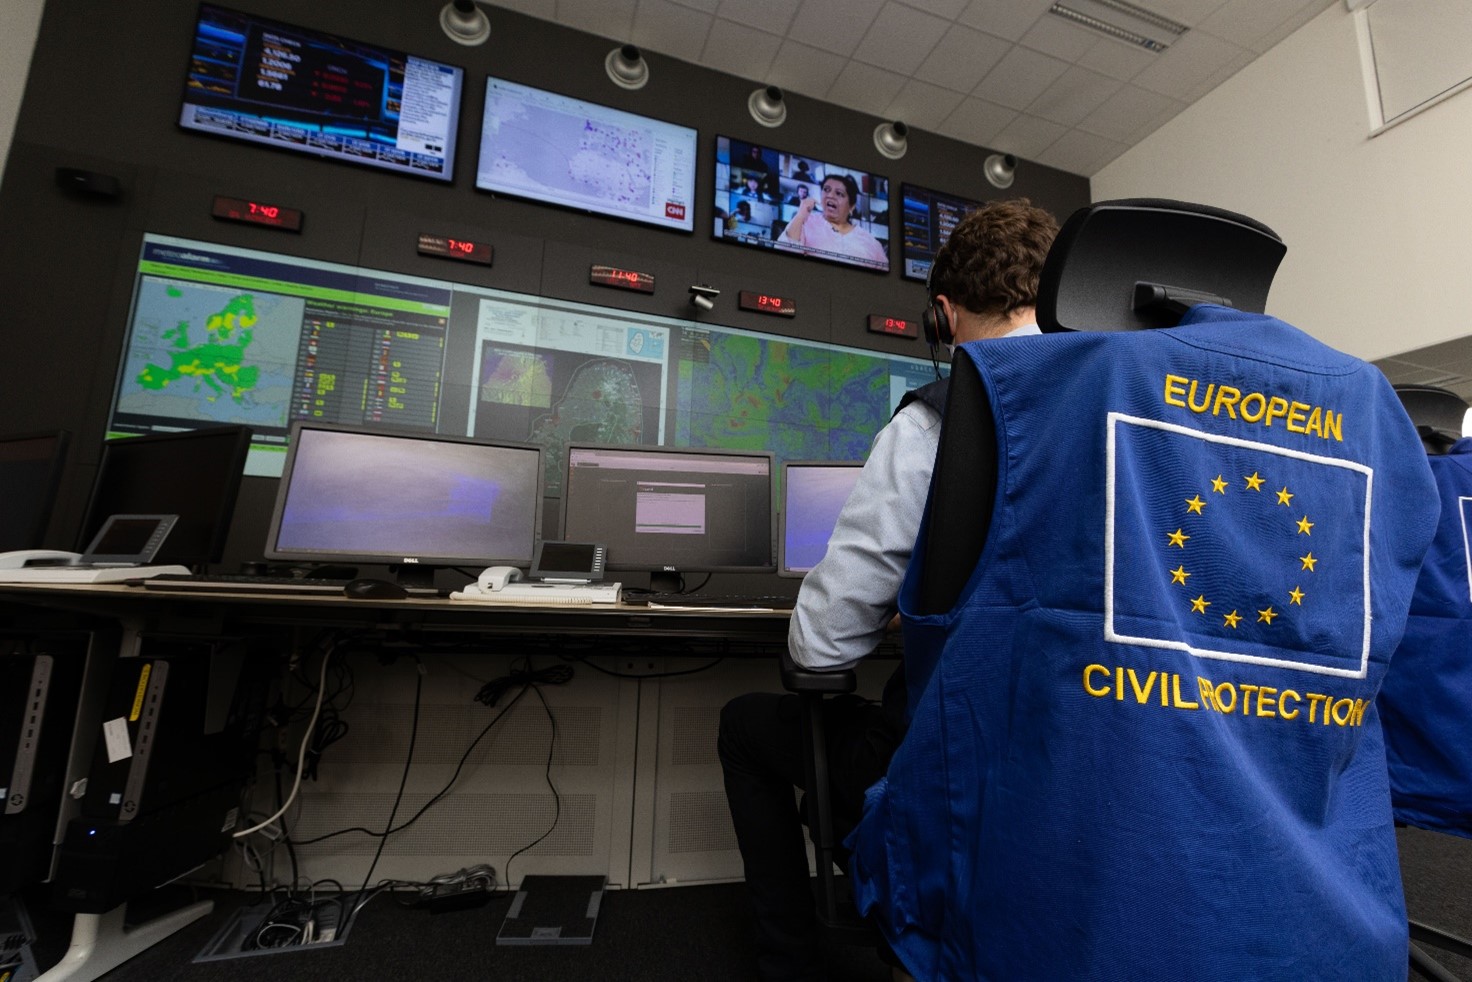 European civil protection employee.